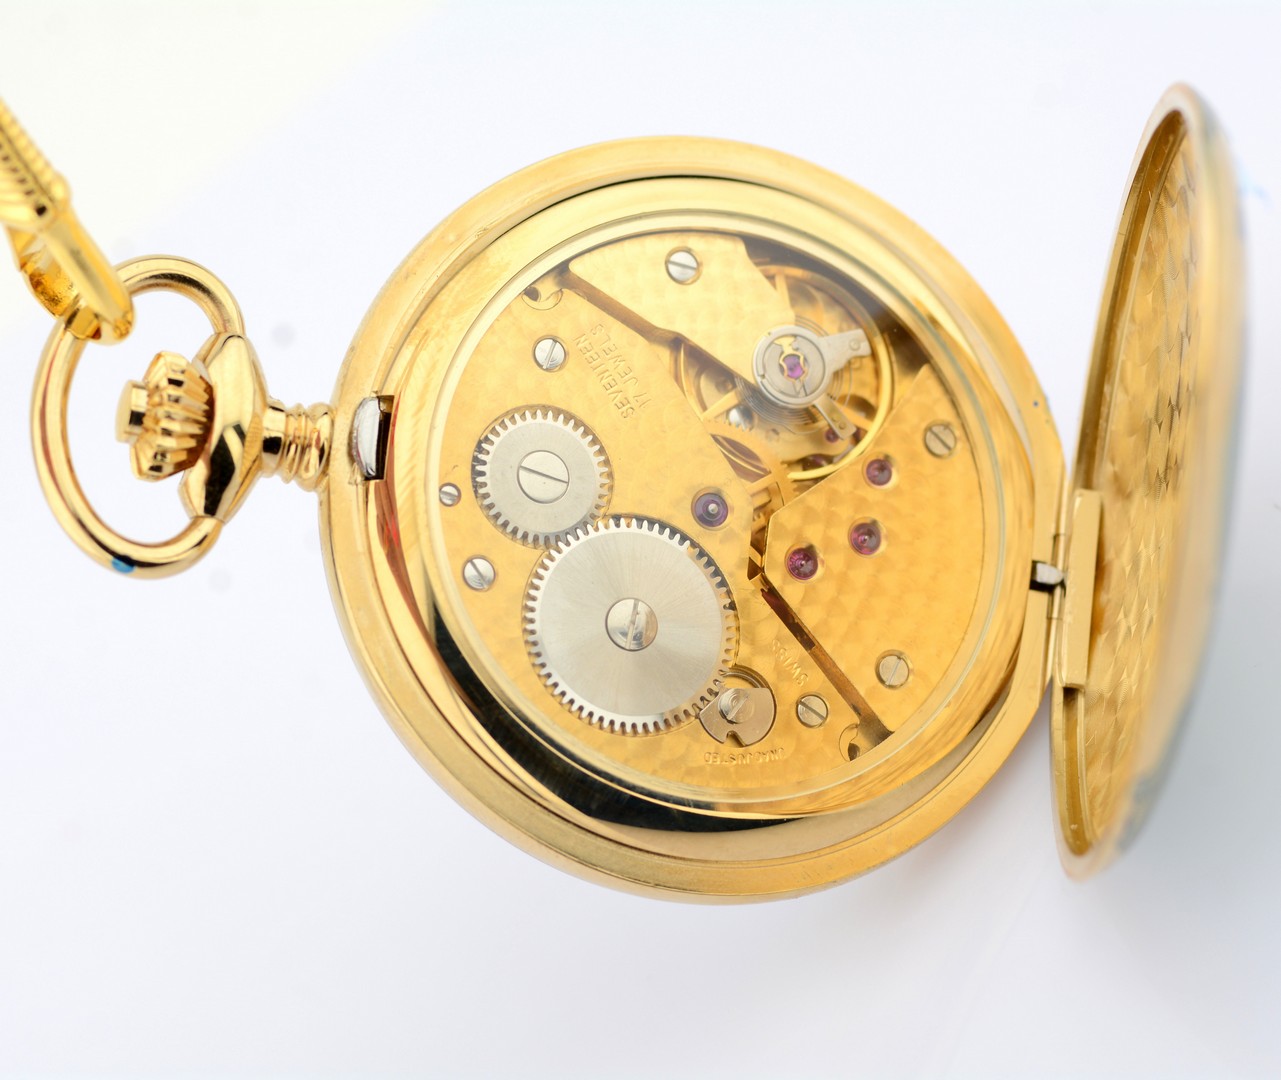 Bulova / Pocket Watch - Gentlemen's Gold/Steel Pocketwatch - Image 7 of 8